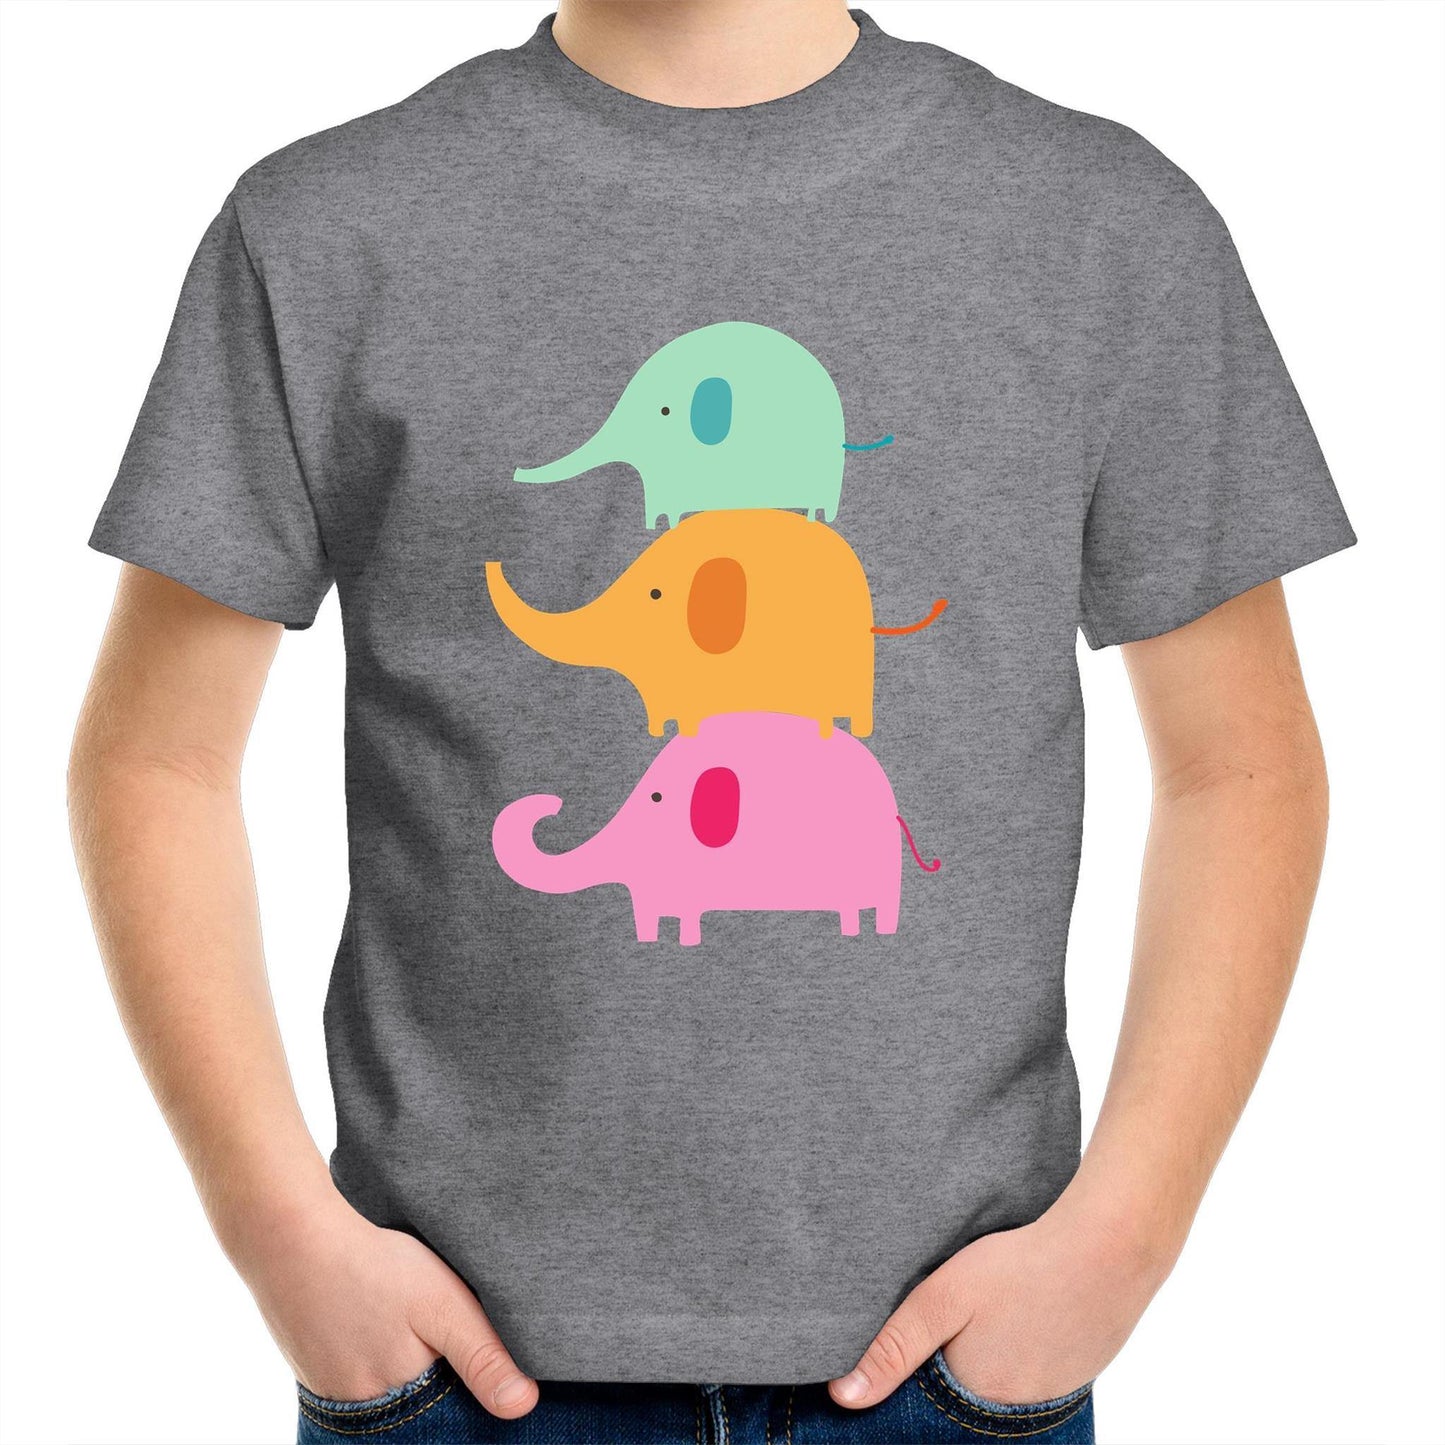 Three Cute Elephants - Kids Youth Crew T-Shirt Grey Marle Kids Youth T-shirt animal